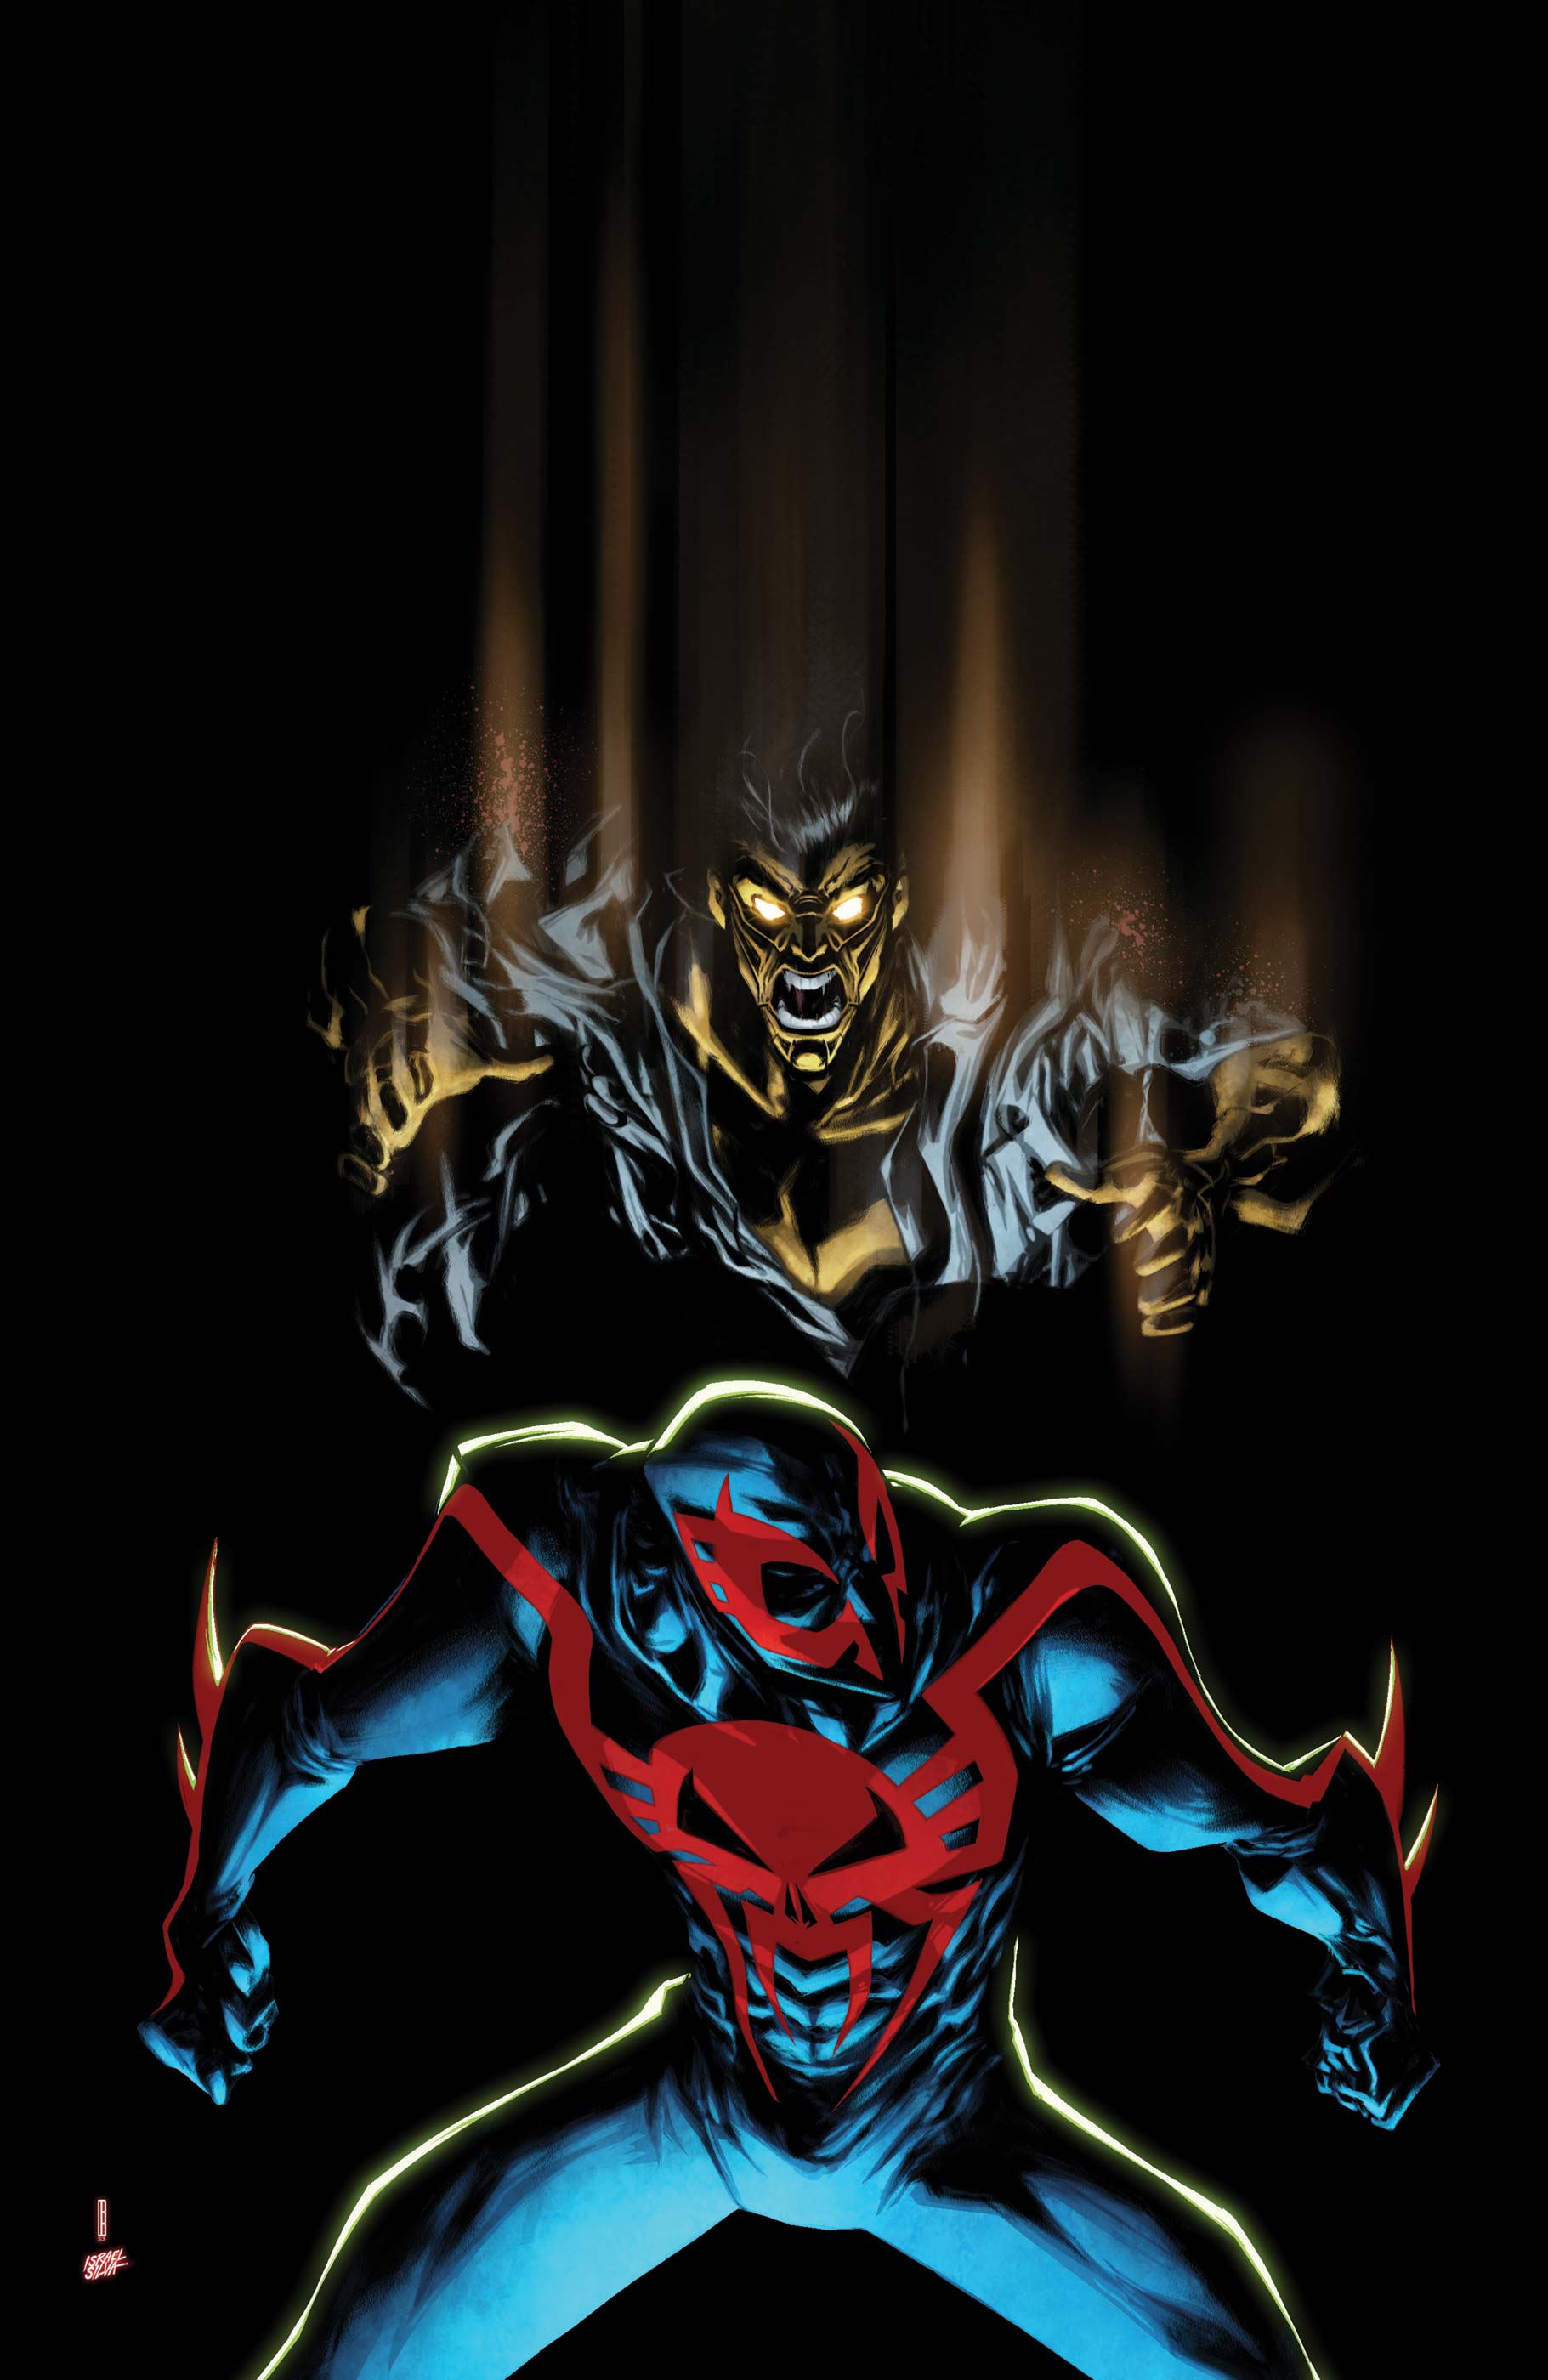 Miguel O'hara - Spider-Man: 2099 (2024) #1 (Variant)